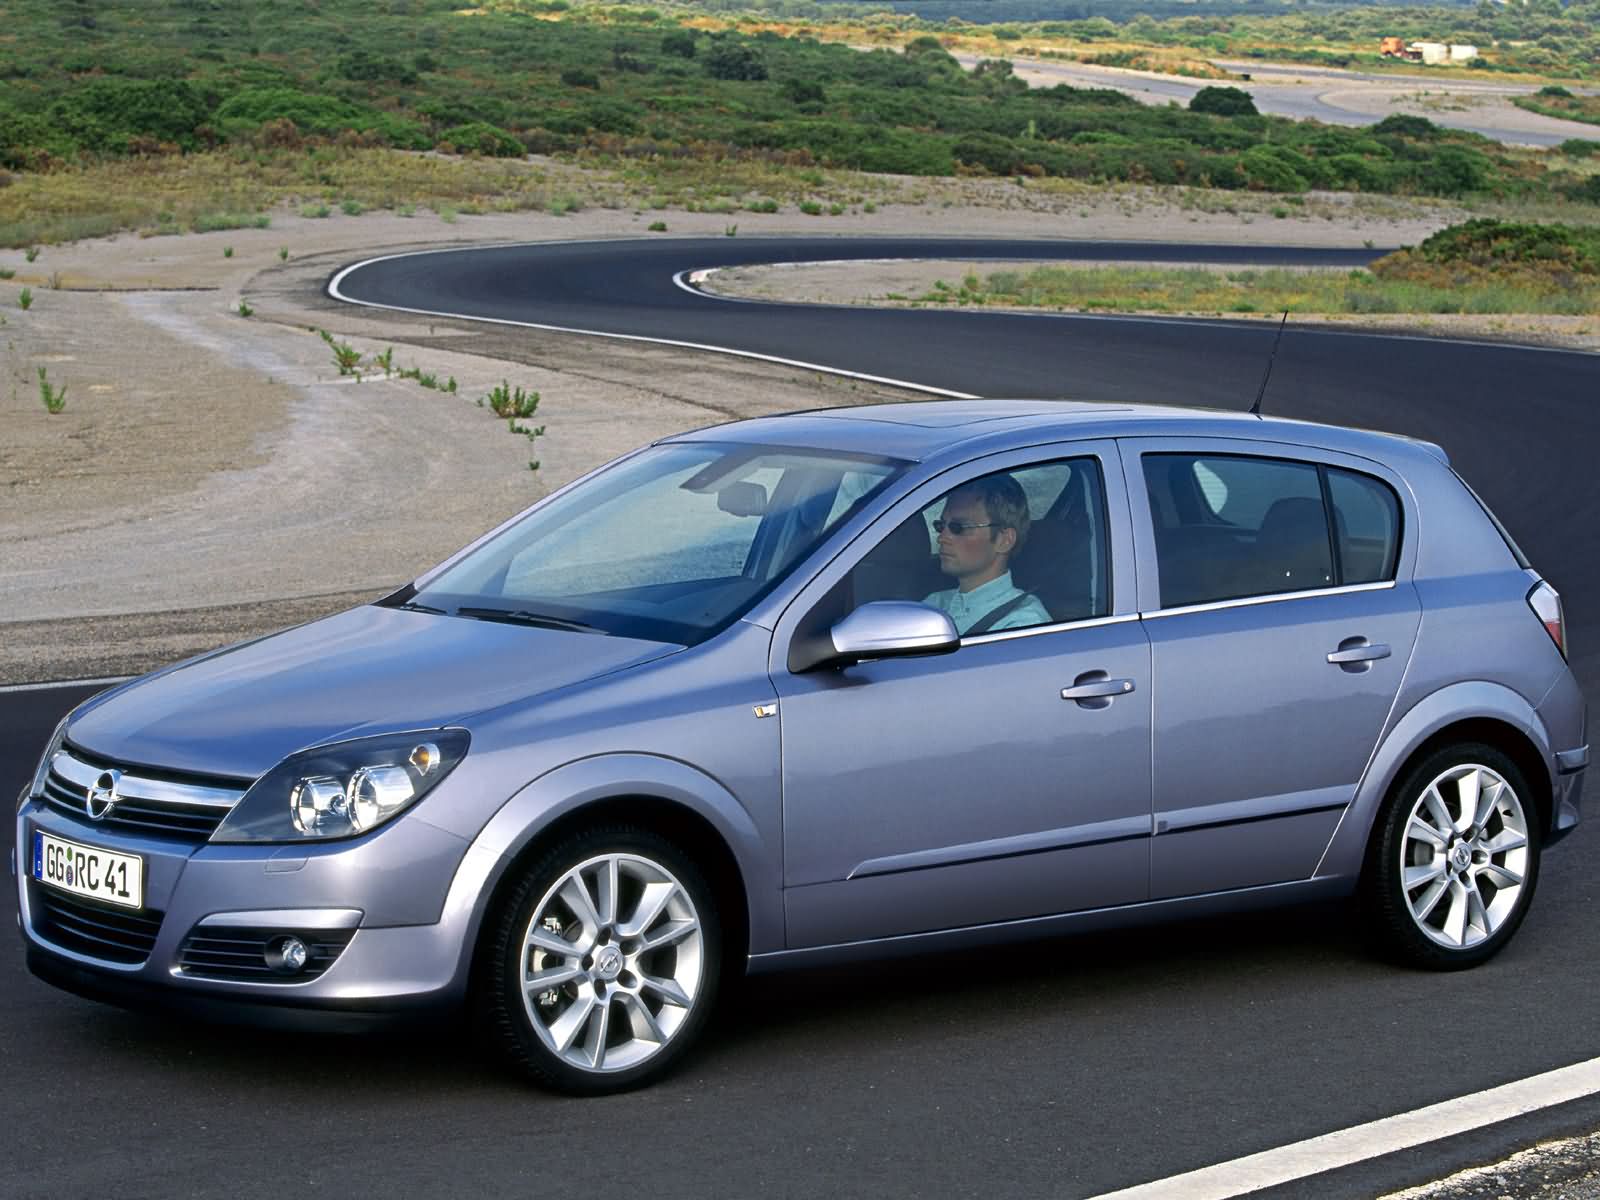 Astra 1.7 download. Opel Astra h 2004. Opel Astra h (2004-2007). Opel Astra 2004. Opel Astra 2004 хэтчбек.